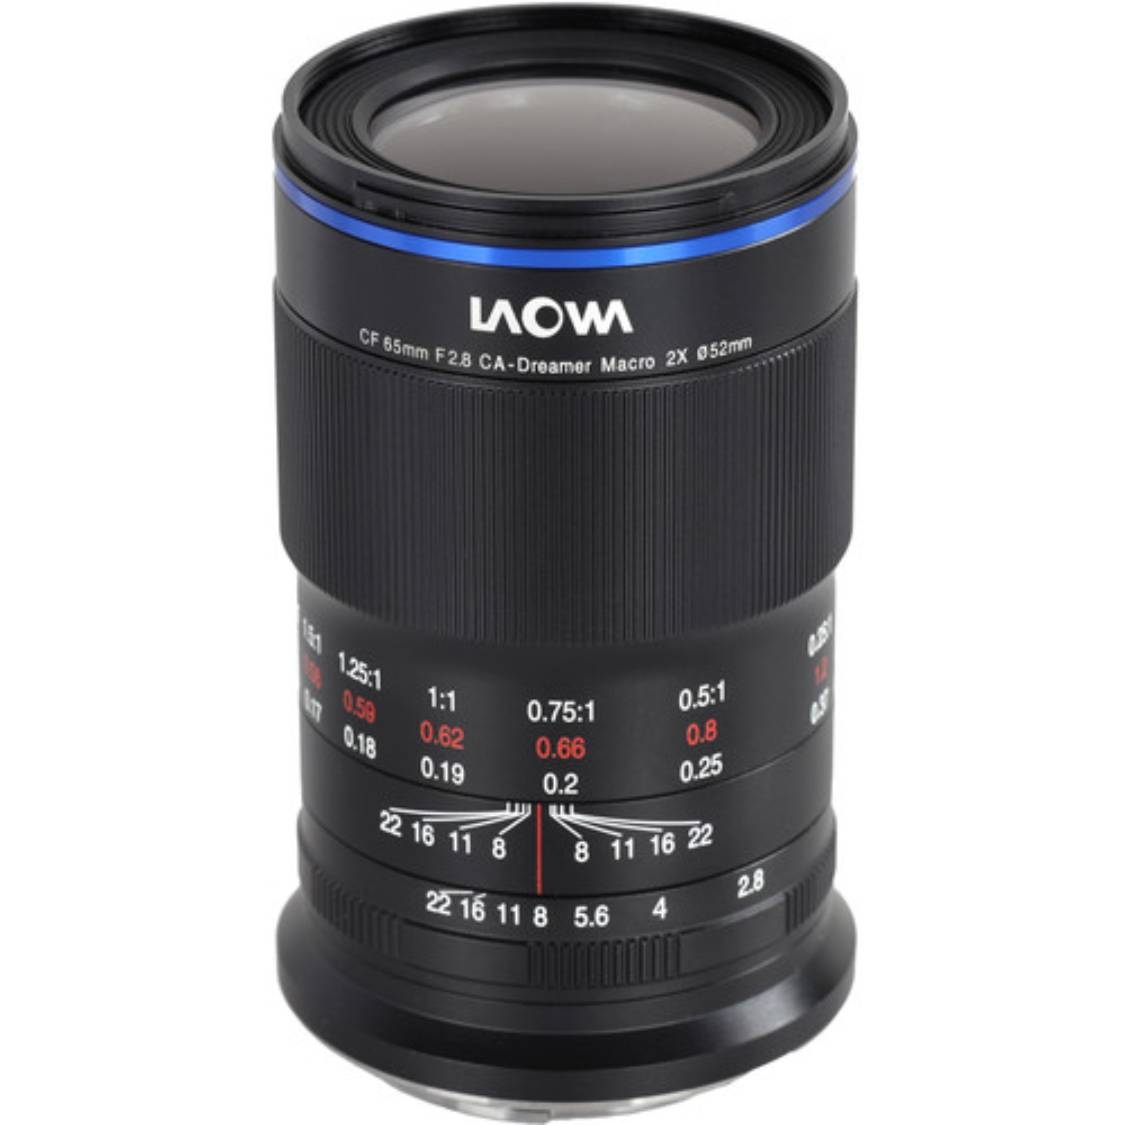  Laowa 65mm f/2.8 2x Ultra Macro APO Lens for Sony E Mount